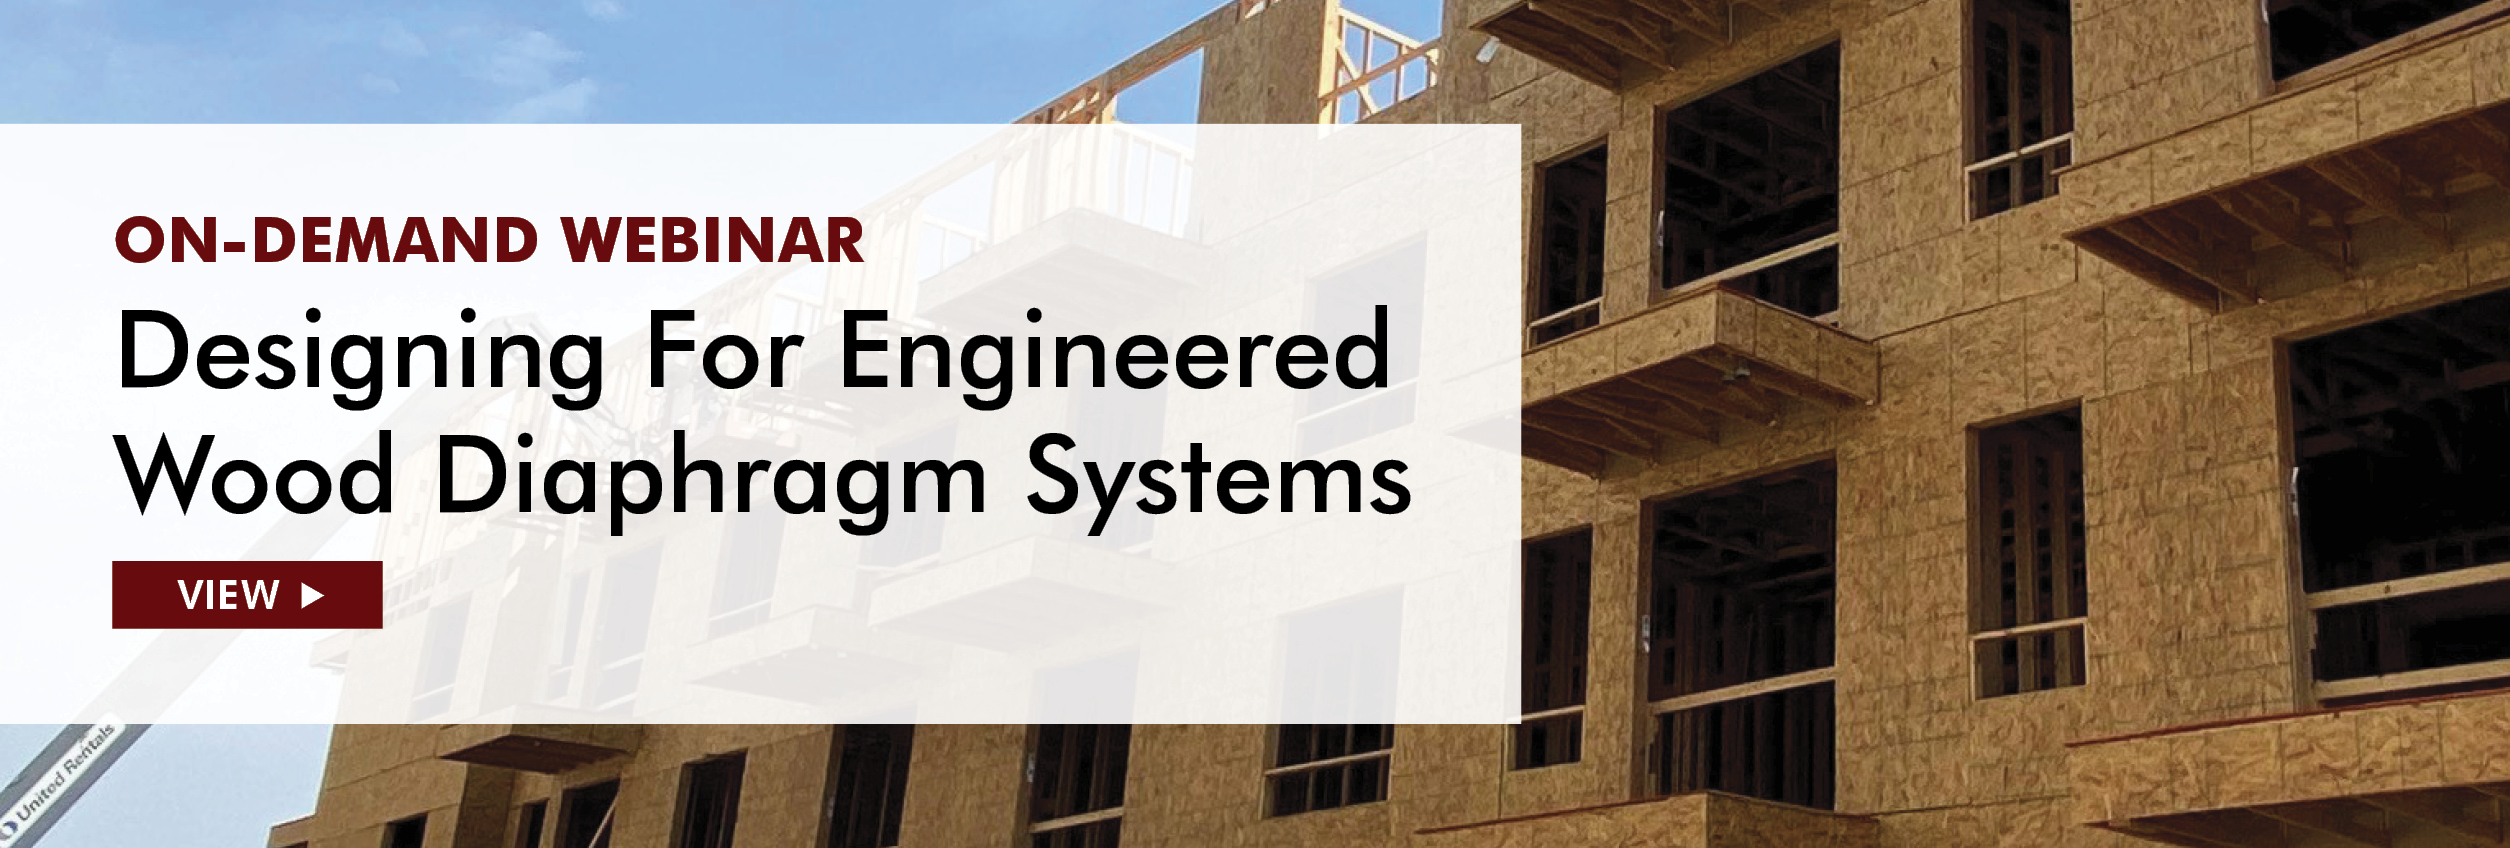 Designing for Engineered Wood Diaphragm Systems Webinar